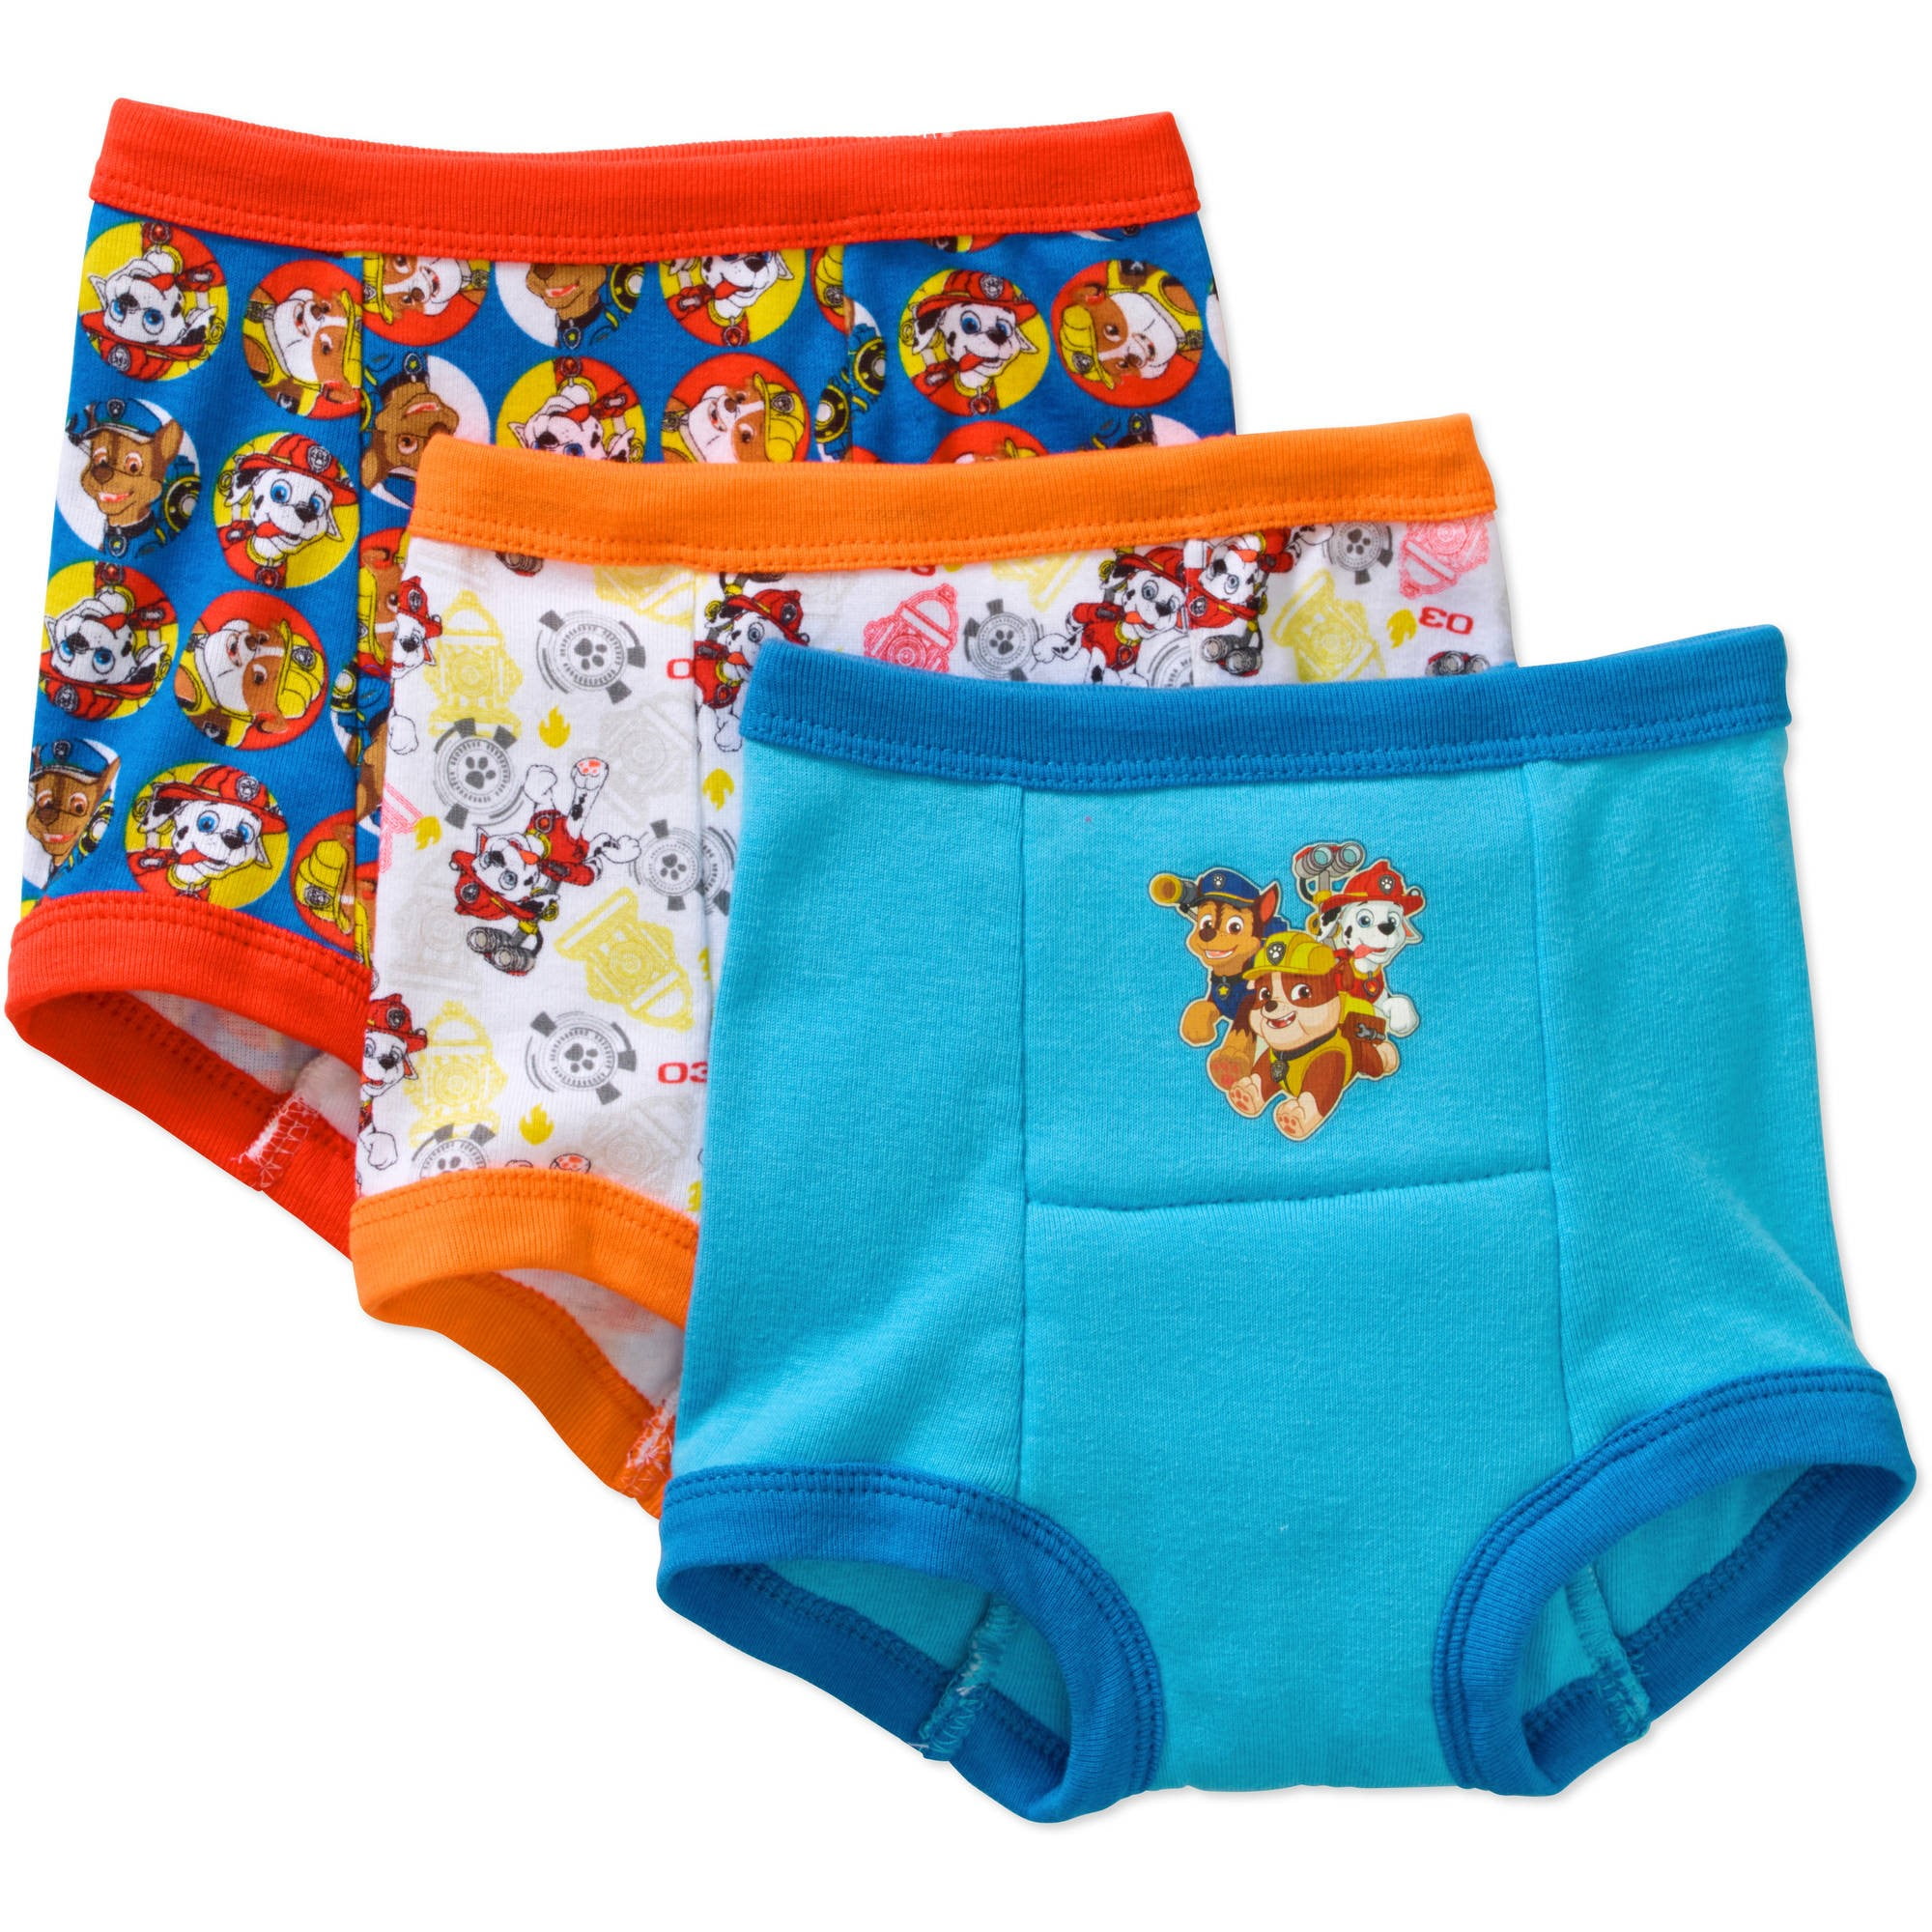 Paw Patrol Potty Training Pants Underwear, 3-Pack (Toddler Boys) 